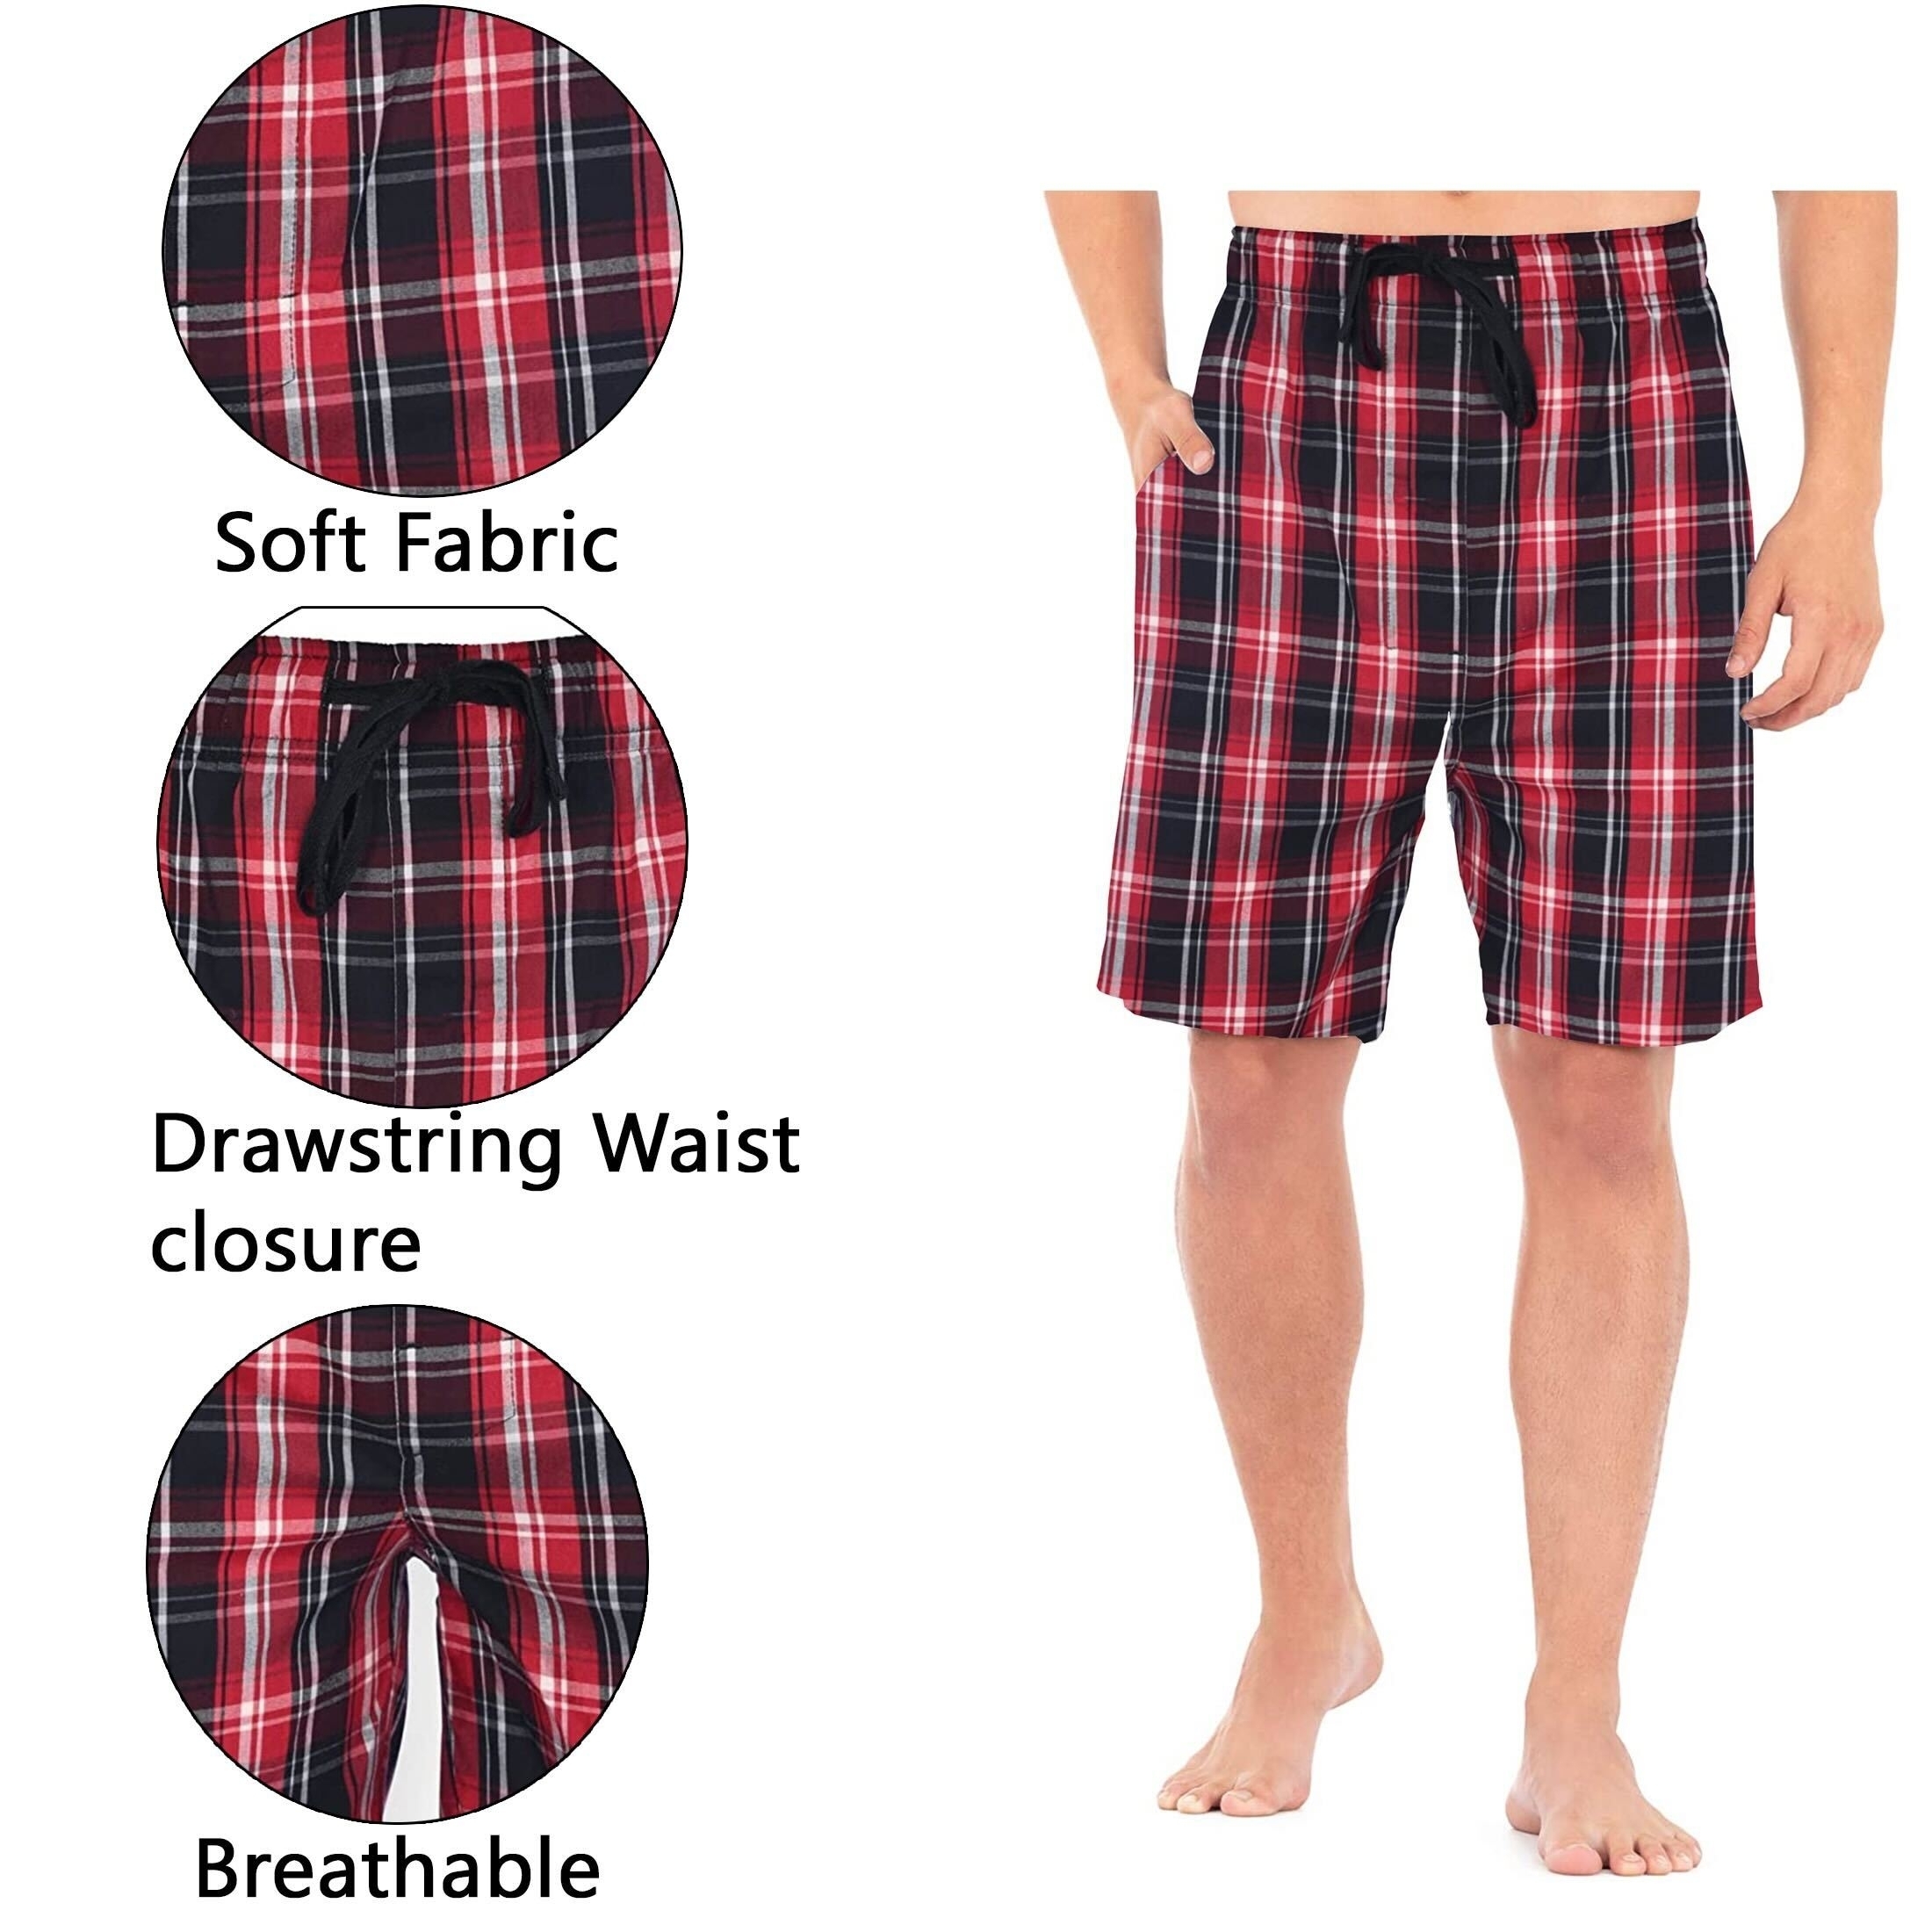 4-Pack Men's Plaid Flannel Sleep Shorts Loose-Fit Lounge Soft Elastic Waistband Tech Pajama Pants - S